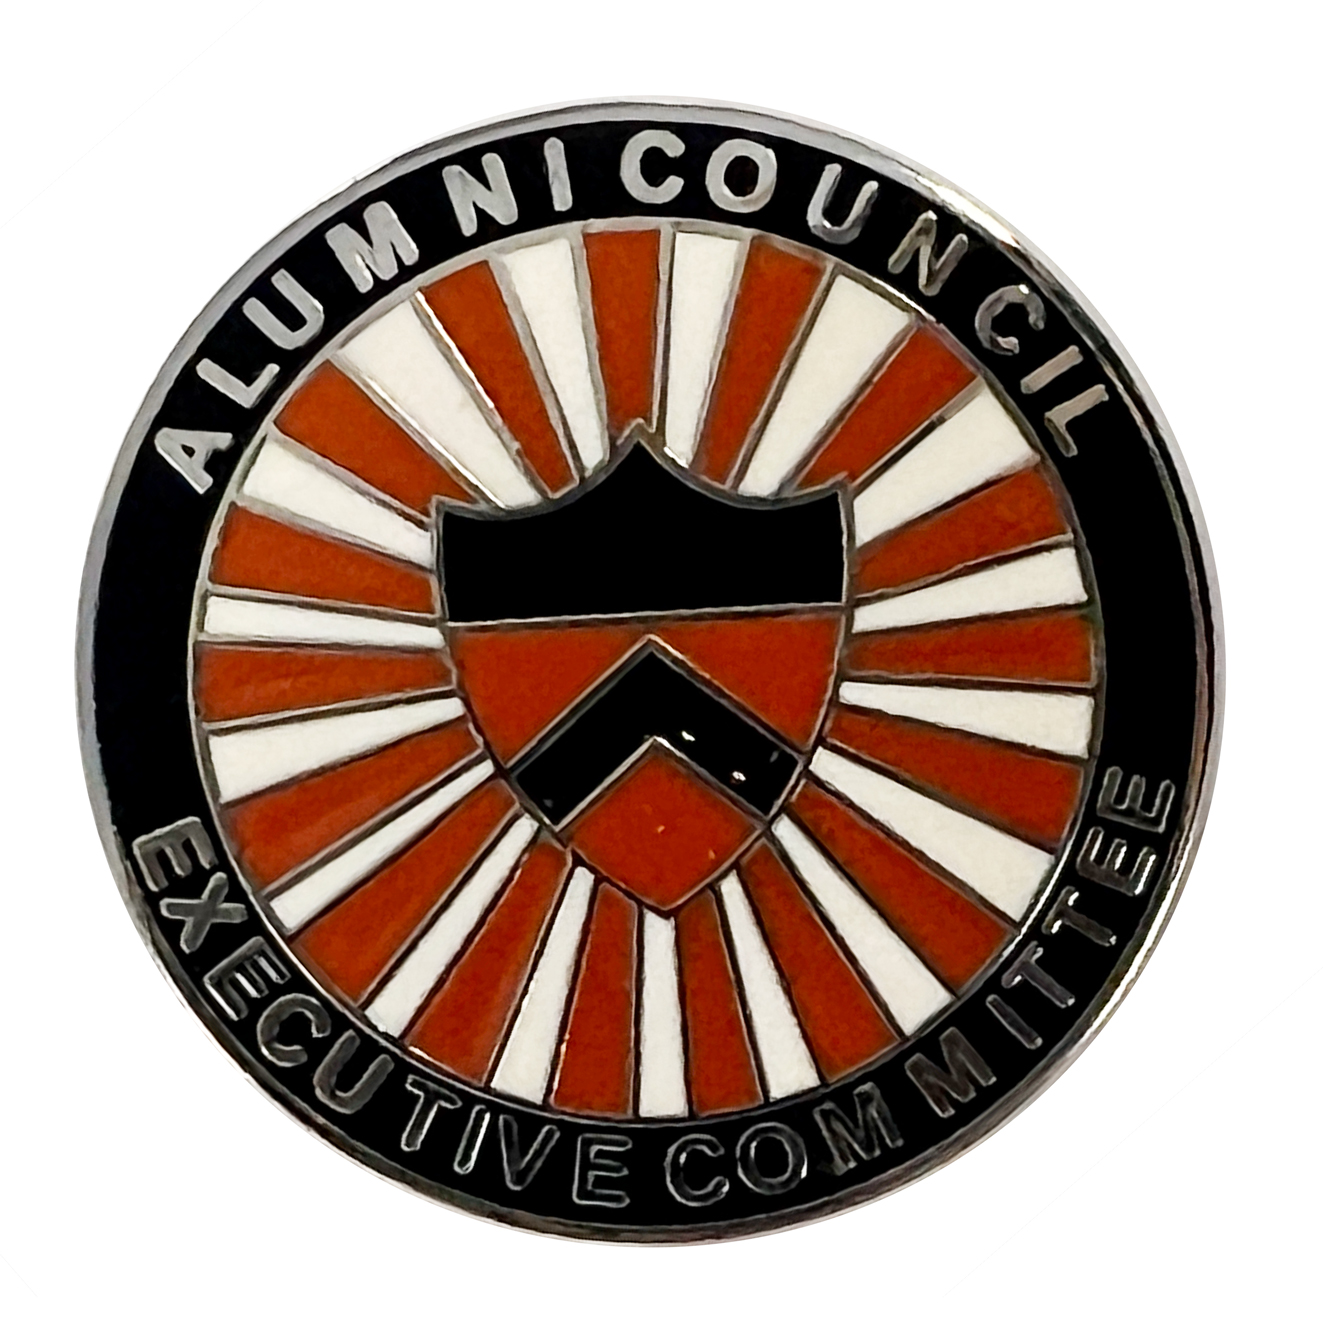 2008 Alumni Council Executive Committee (ACEC) Pin